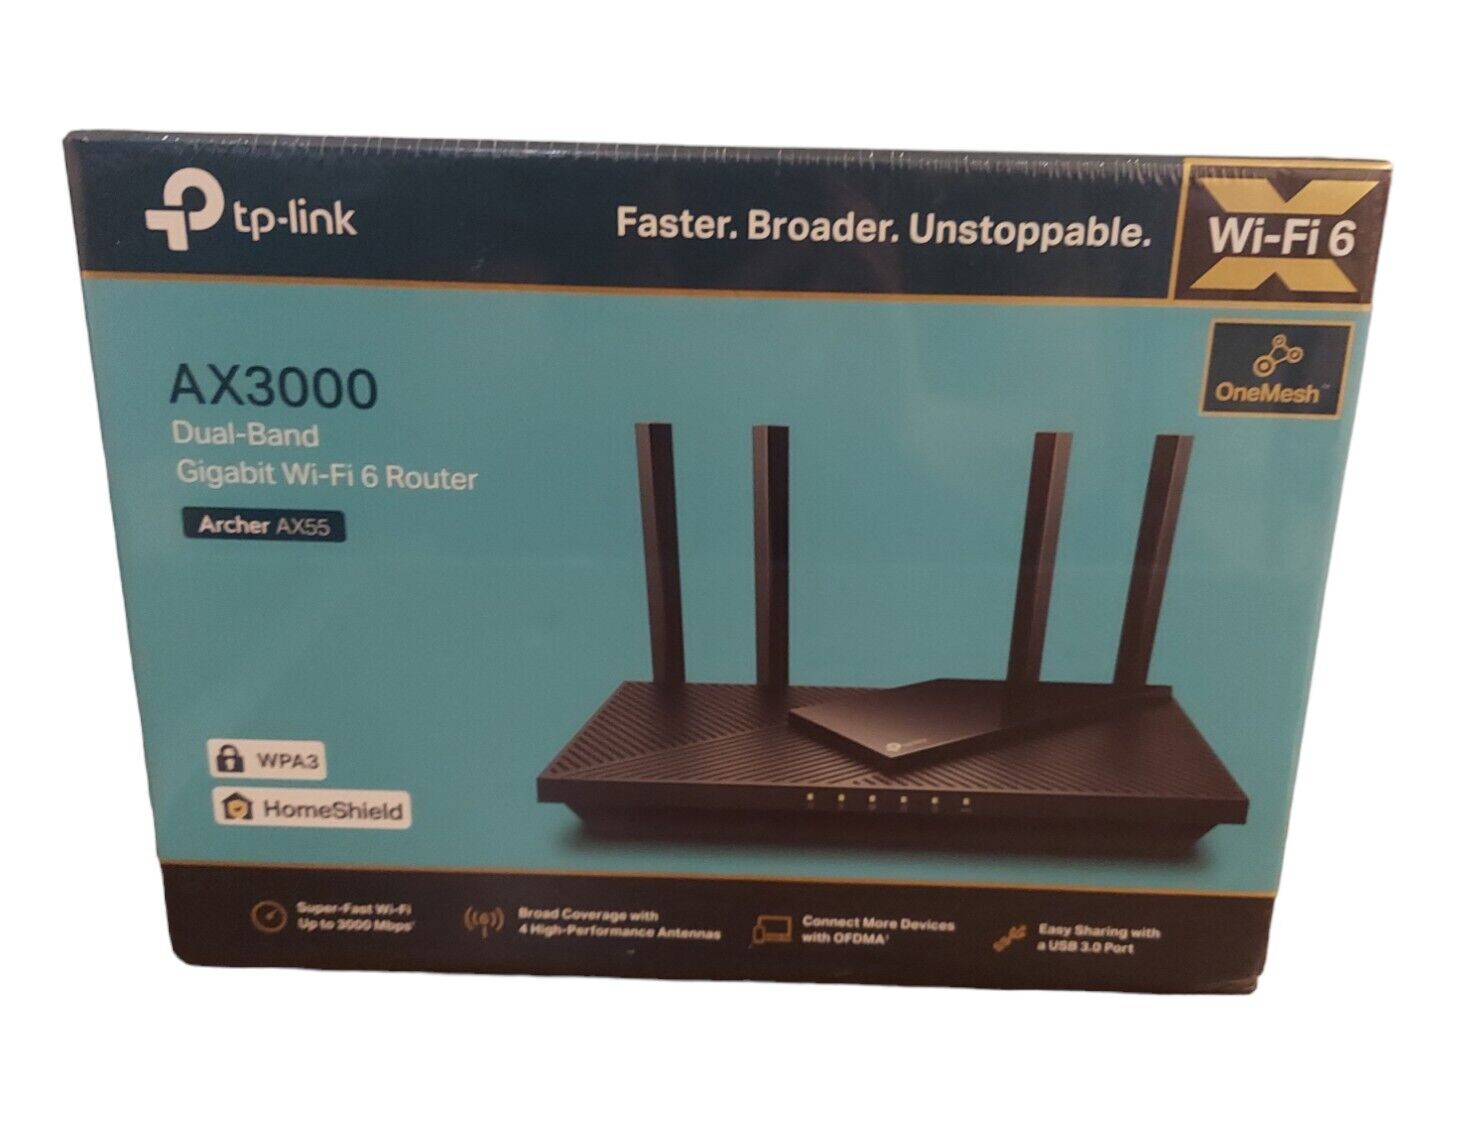 NIB TP-Link AX3000 Dual Band Gigabit Wi-Fi 6 Router,USB 3.0, Archer AX55, Wirele